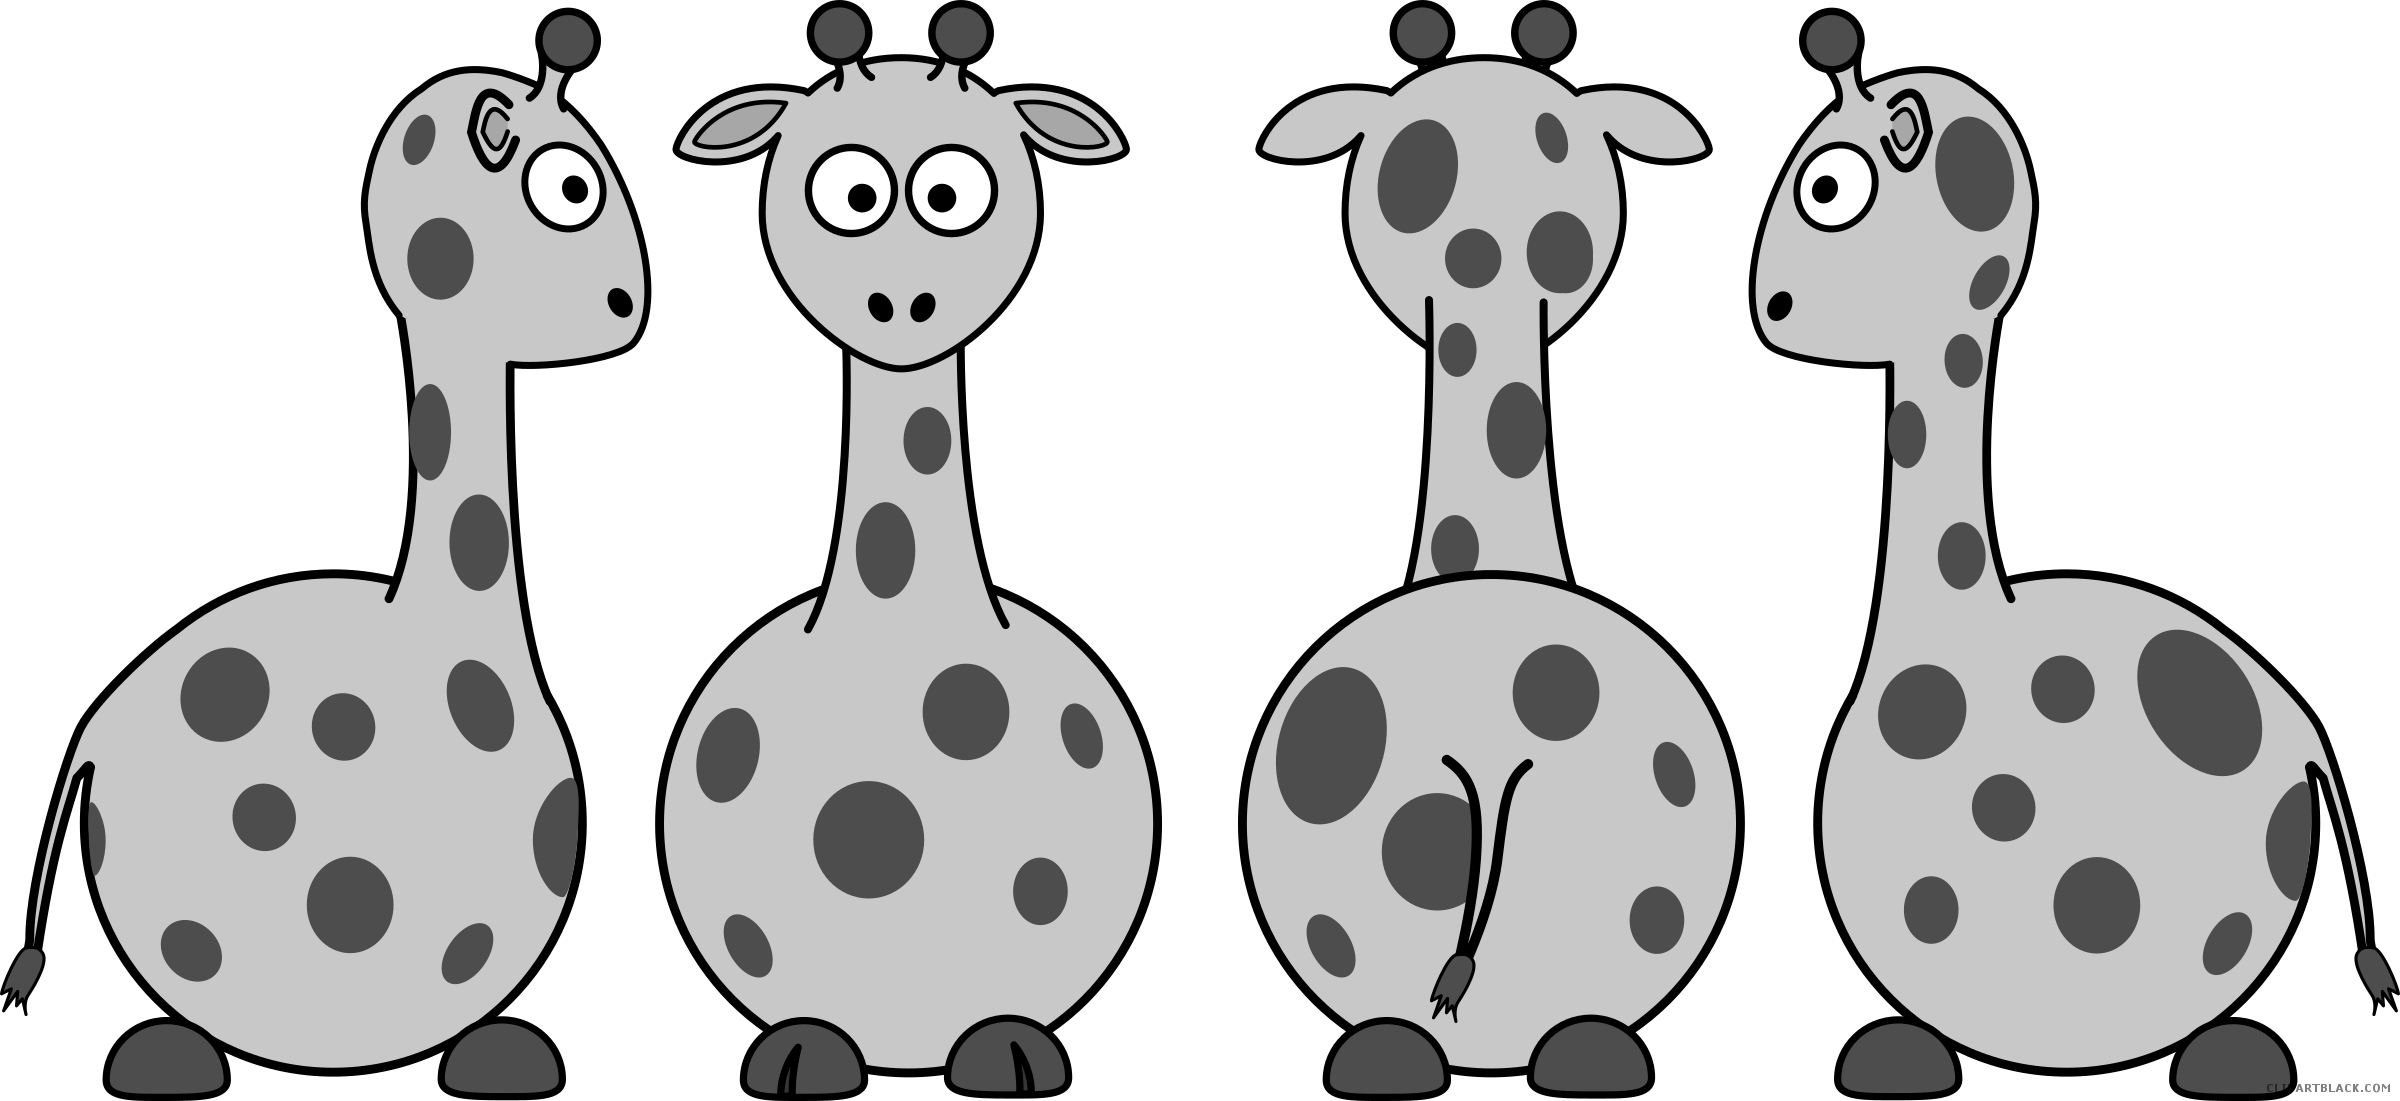 giraffe clipart cartoon